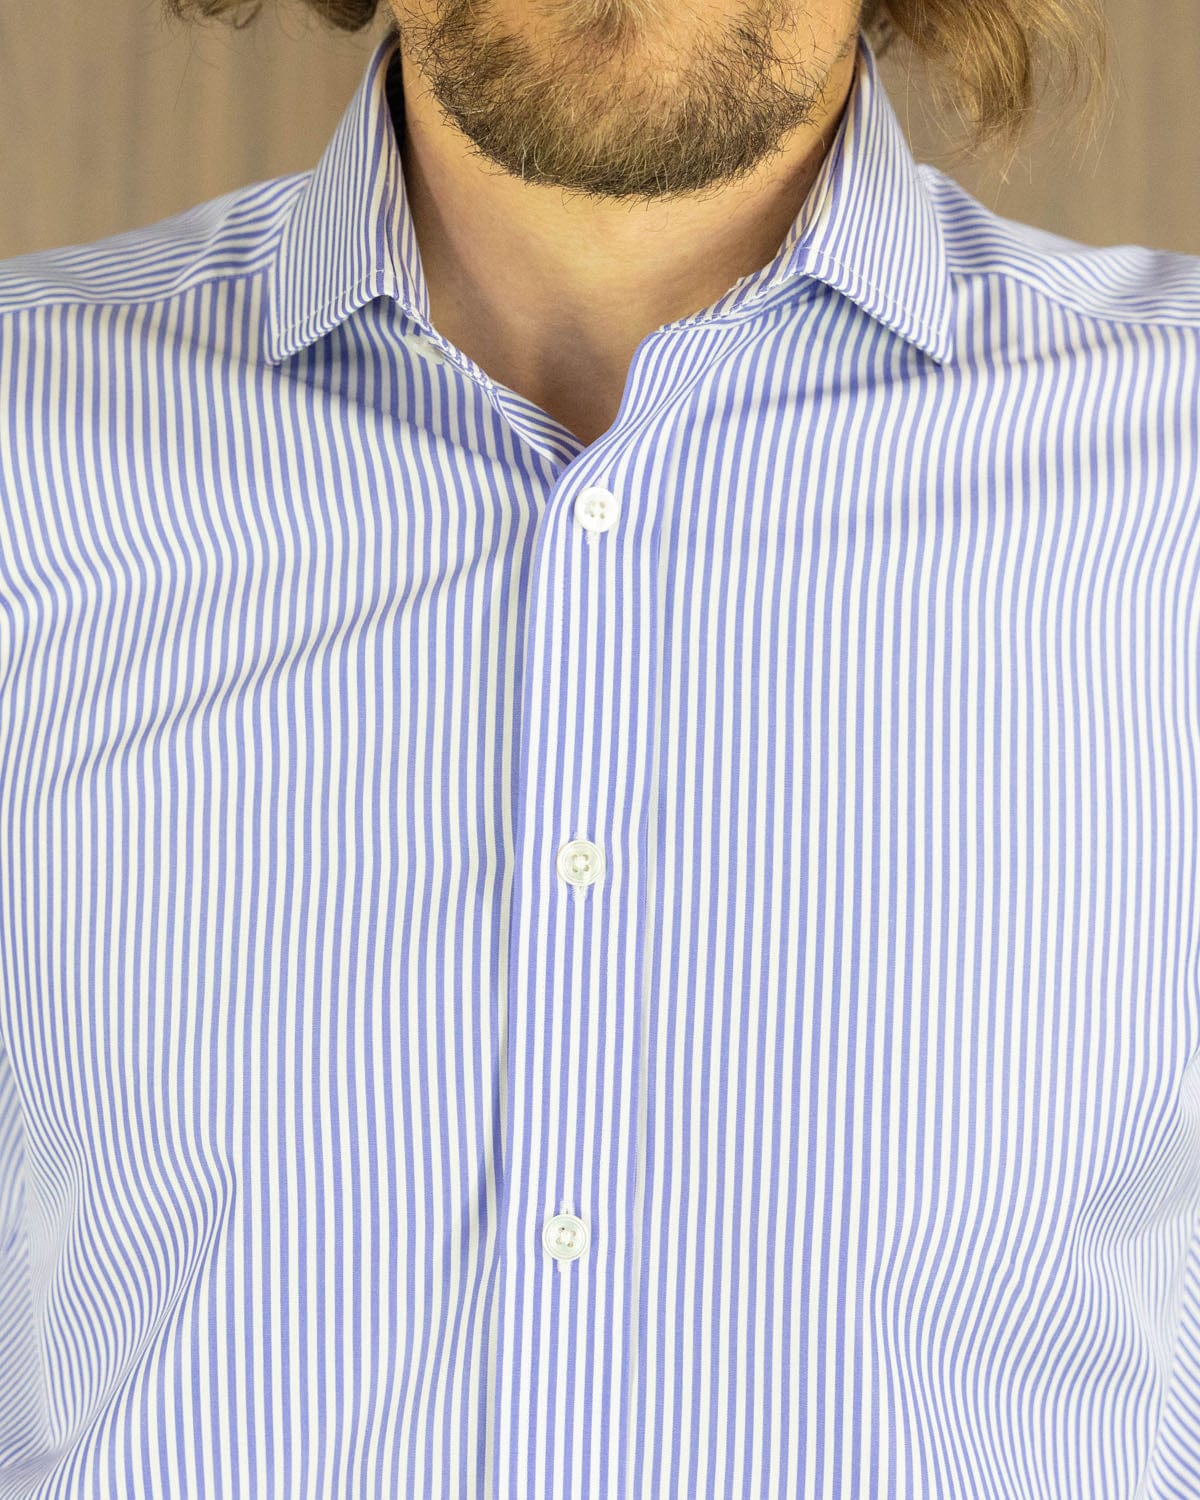 Classic Fit, Cut-away Collar, Double Cuff Shirt in a Blue & White Medium Bengal Poplin Cotton - Hilditch & Key